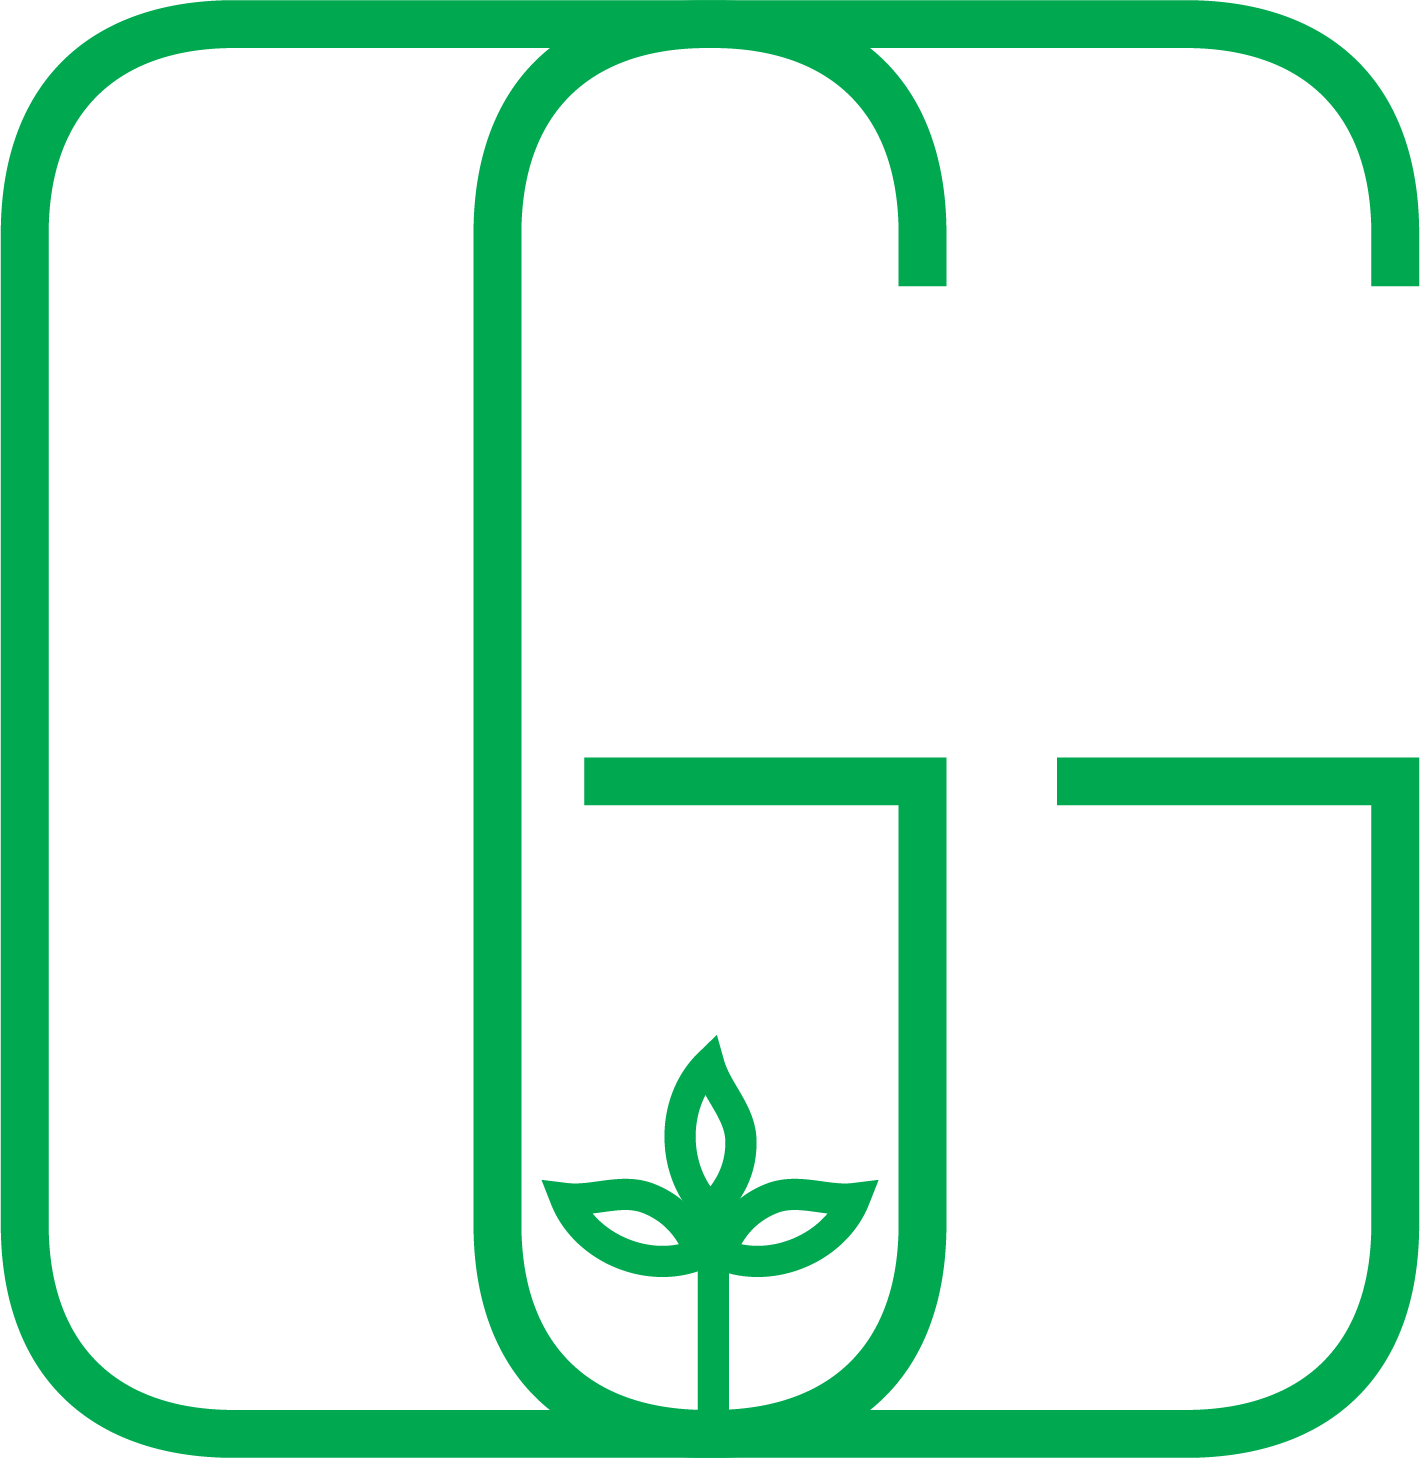 GREEN GROWTH BRANDS (CBD UNIT)